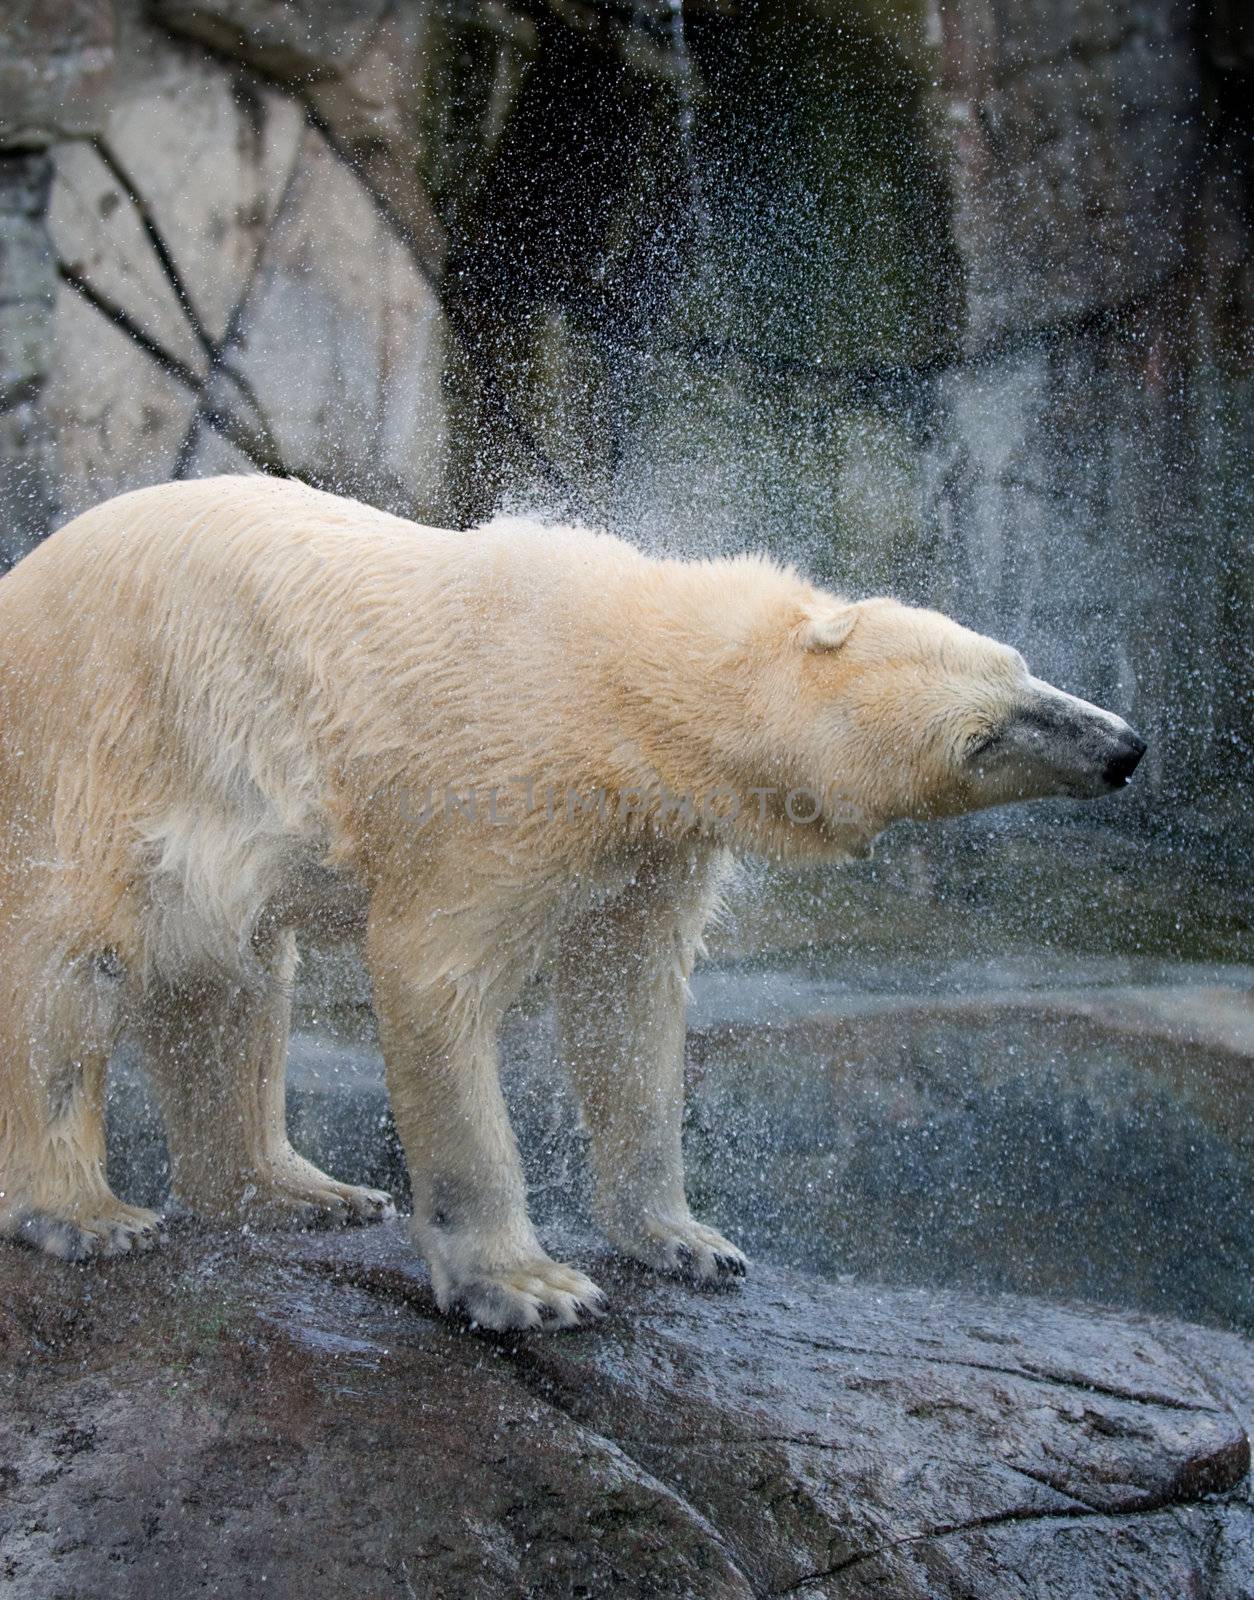 Polar bear shaking water out of the fur, seen in the Copenhagen ZOO.